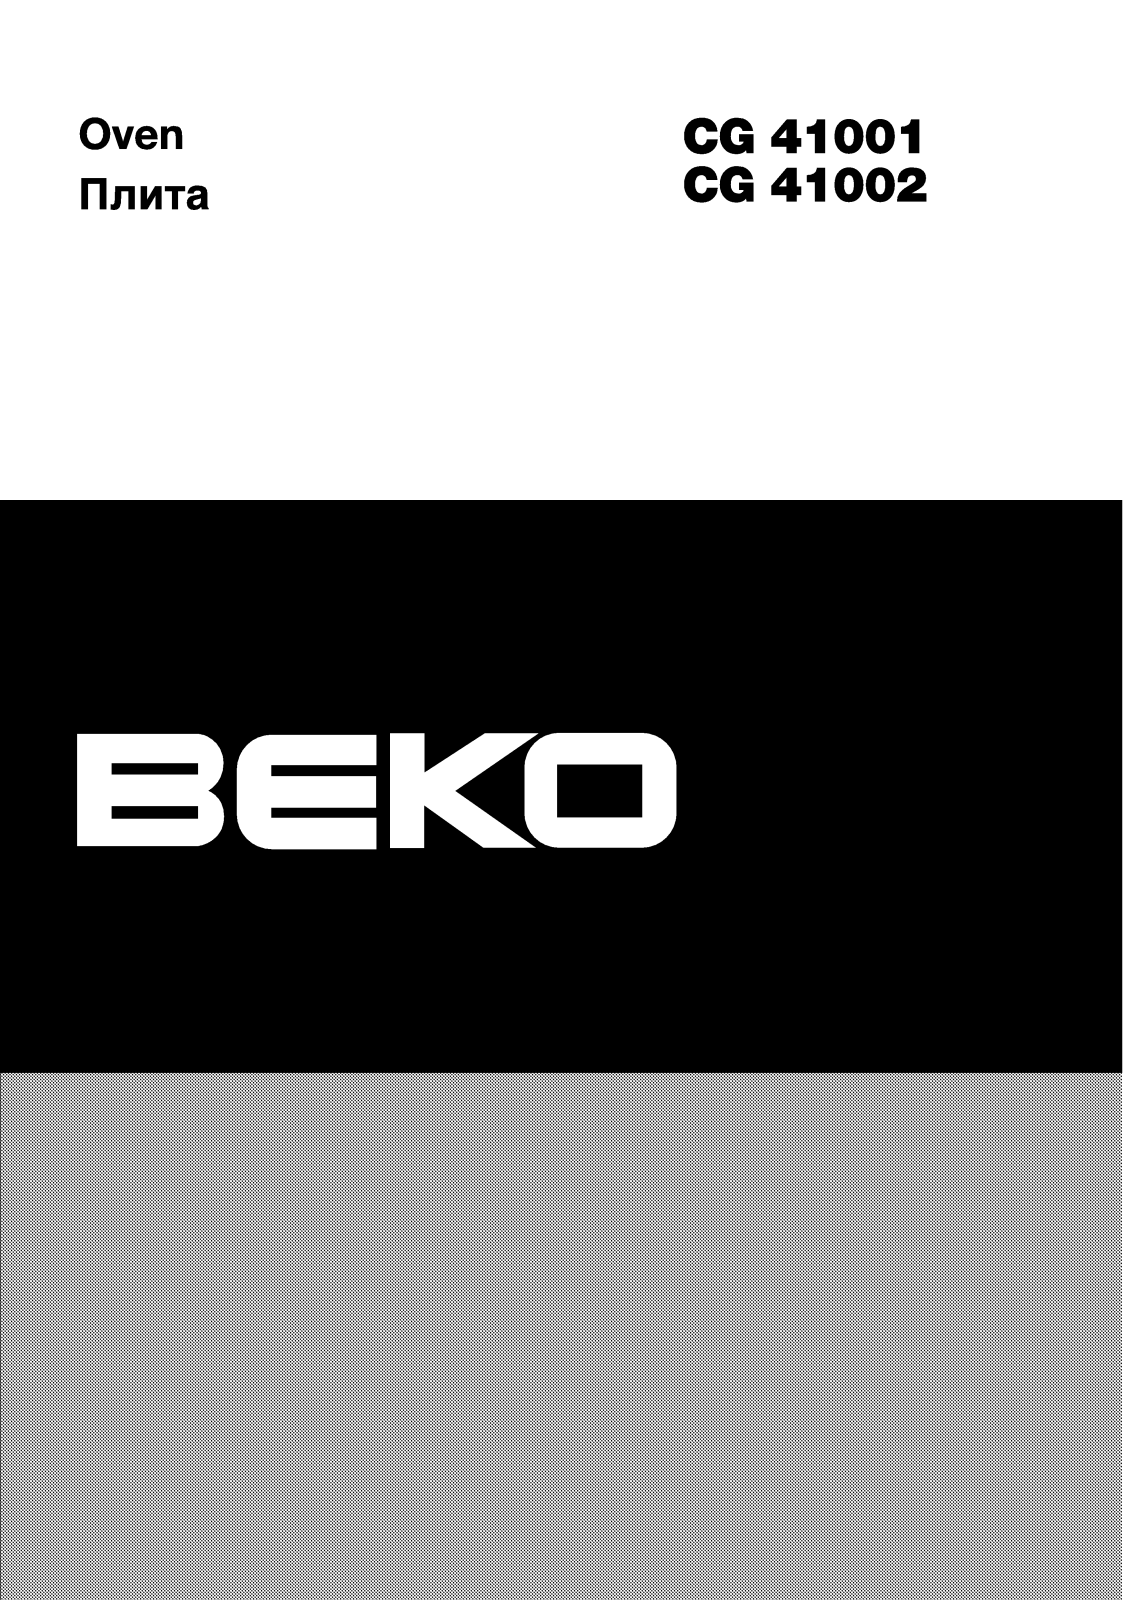 Beko CG 41001, CG 41002 User Manual